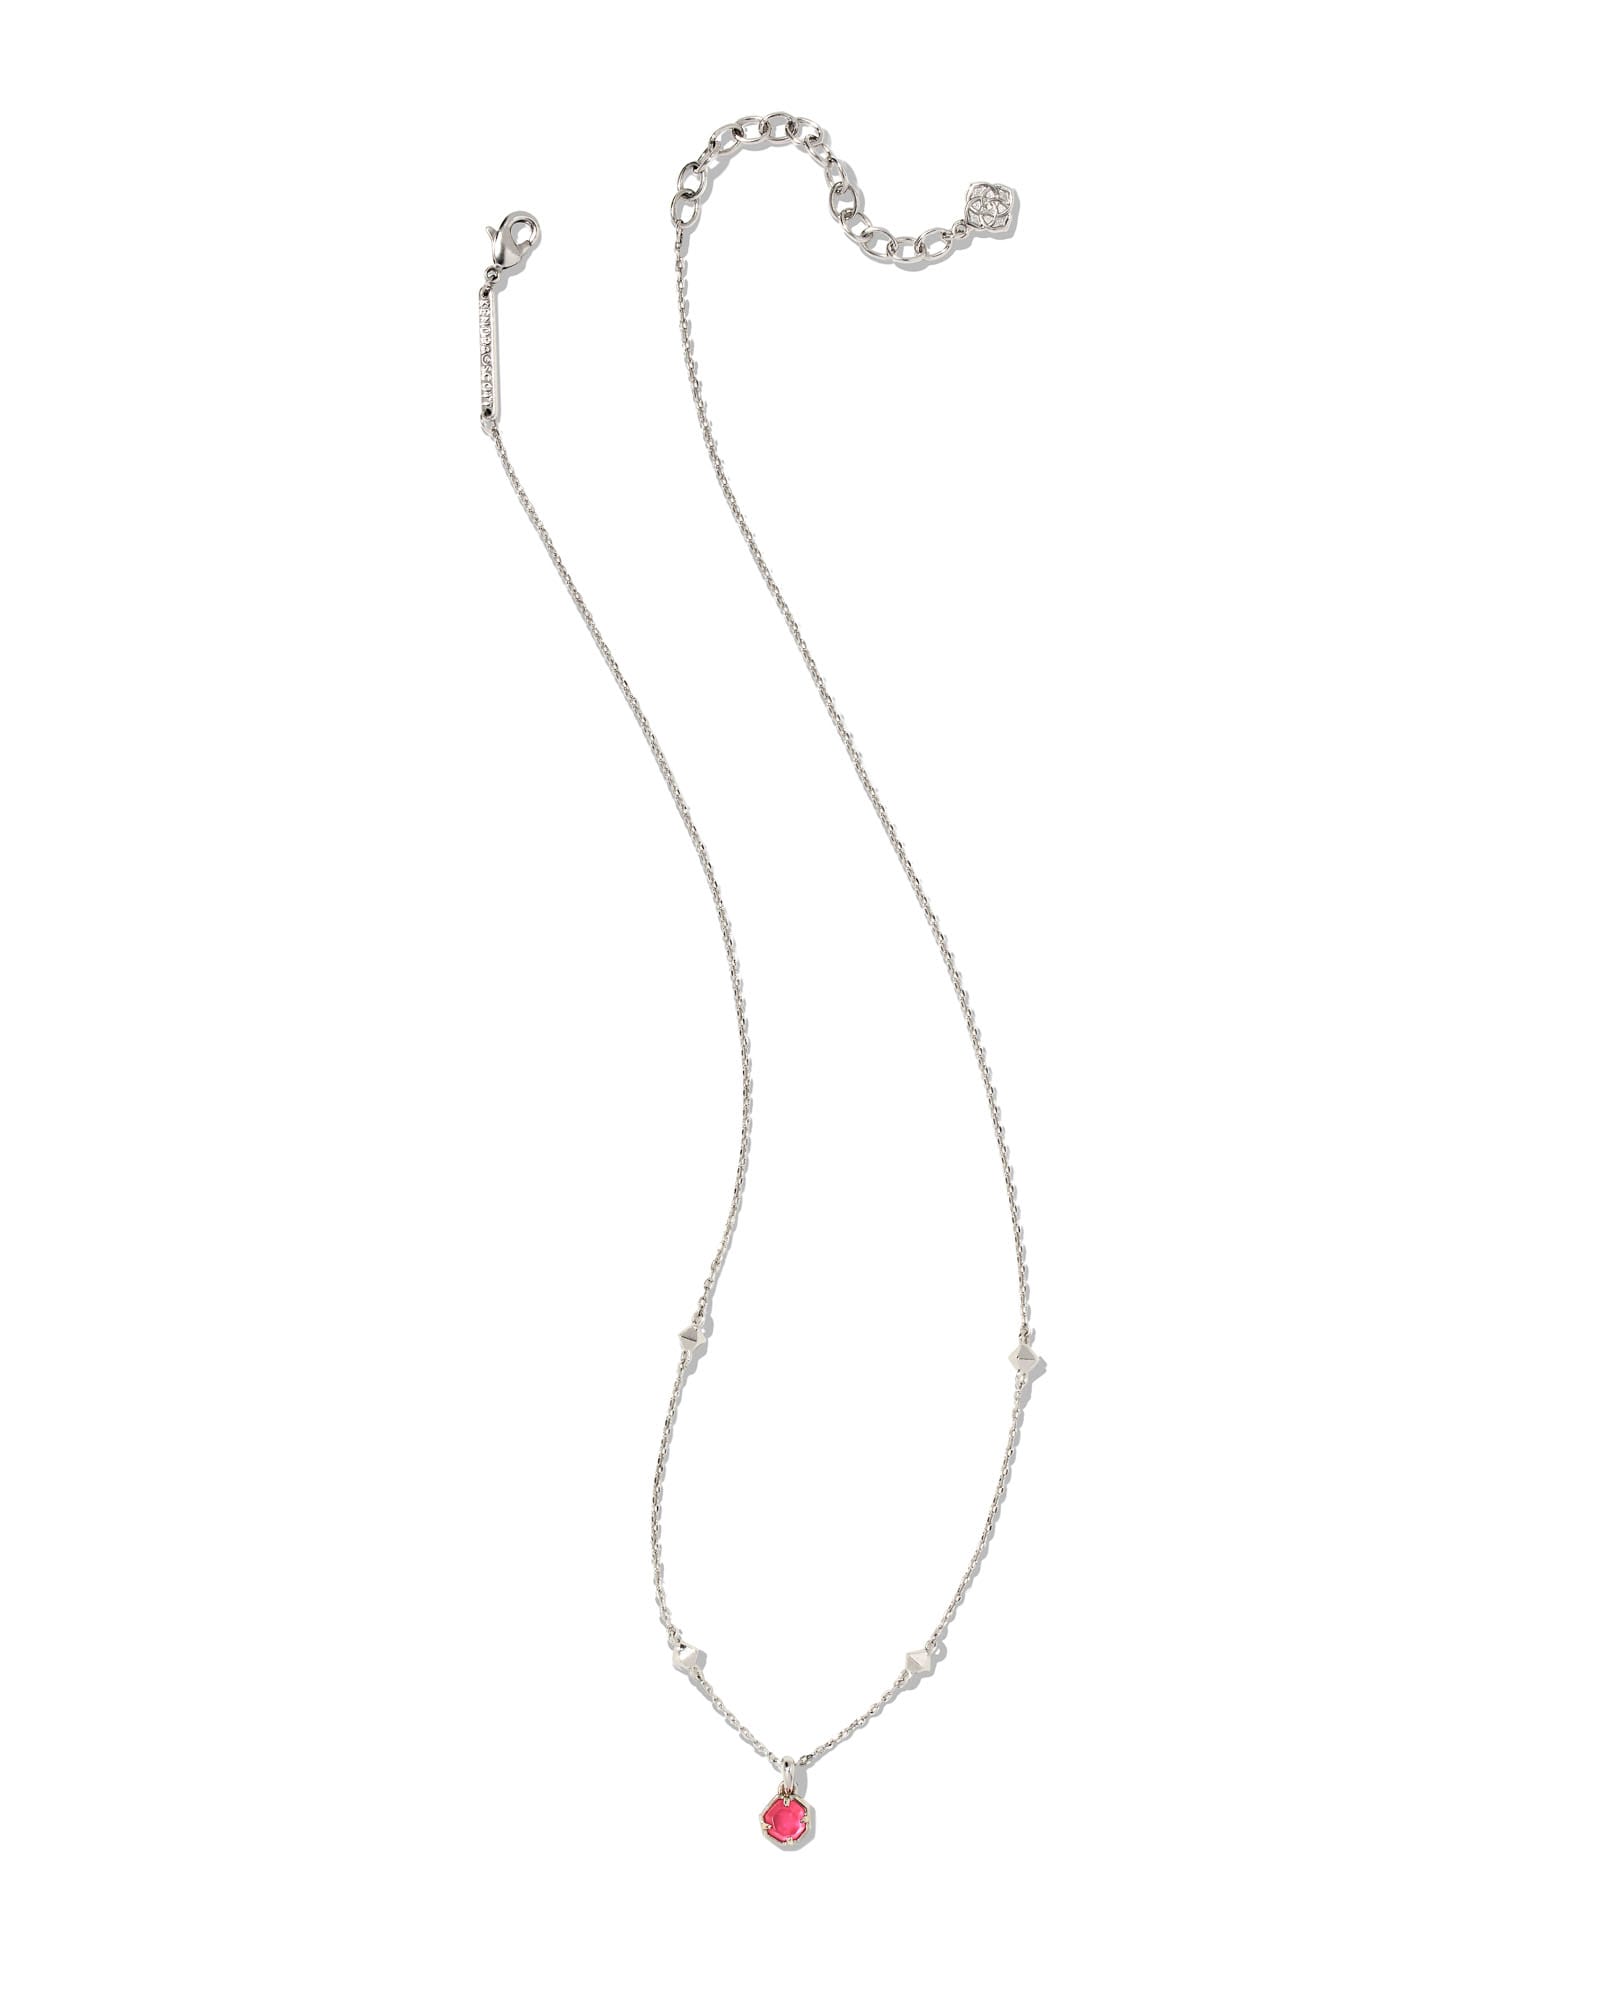 Nola Silver Pendant Necklace in Pink Azalea Illusion